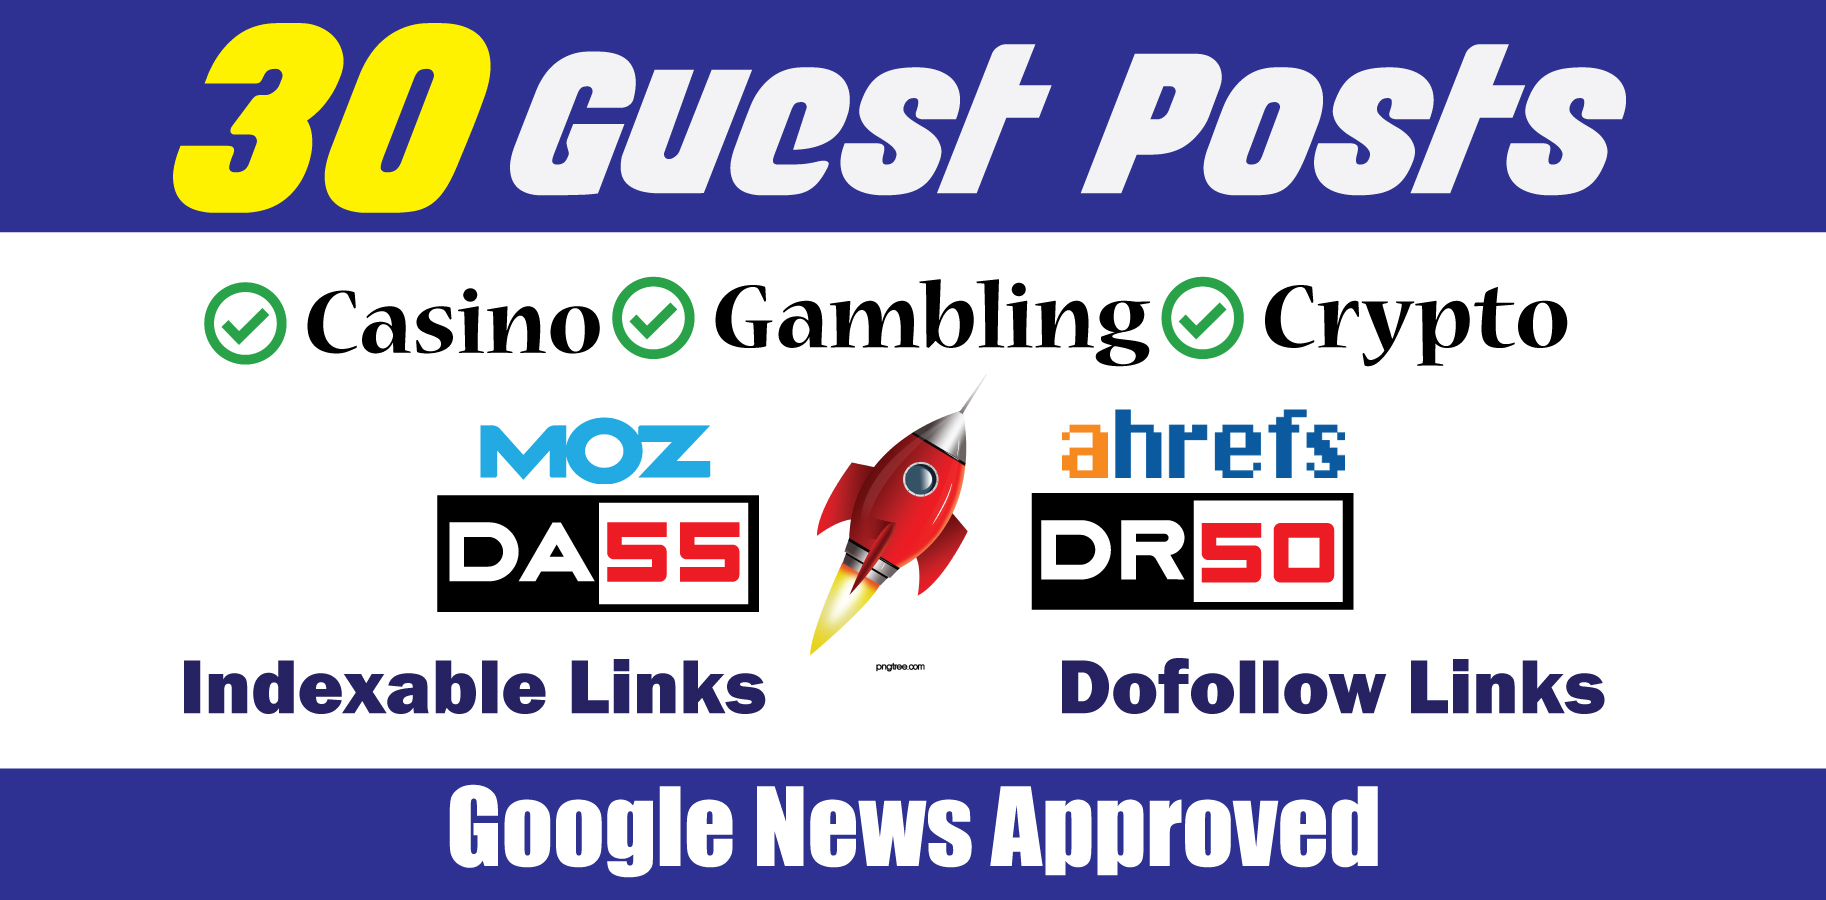 30 Guest Posts For Casino, Gambling, Crypto [DA55, DR45 Google News Blogs]